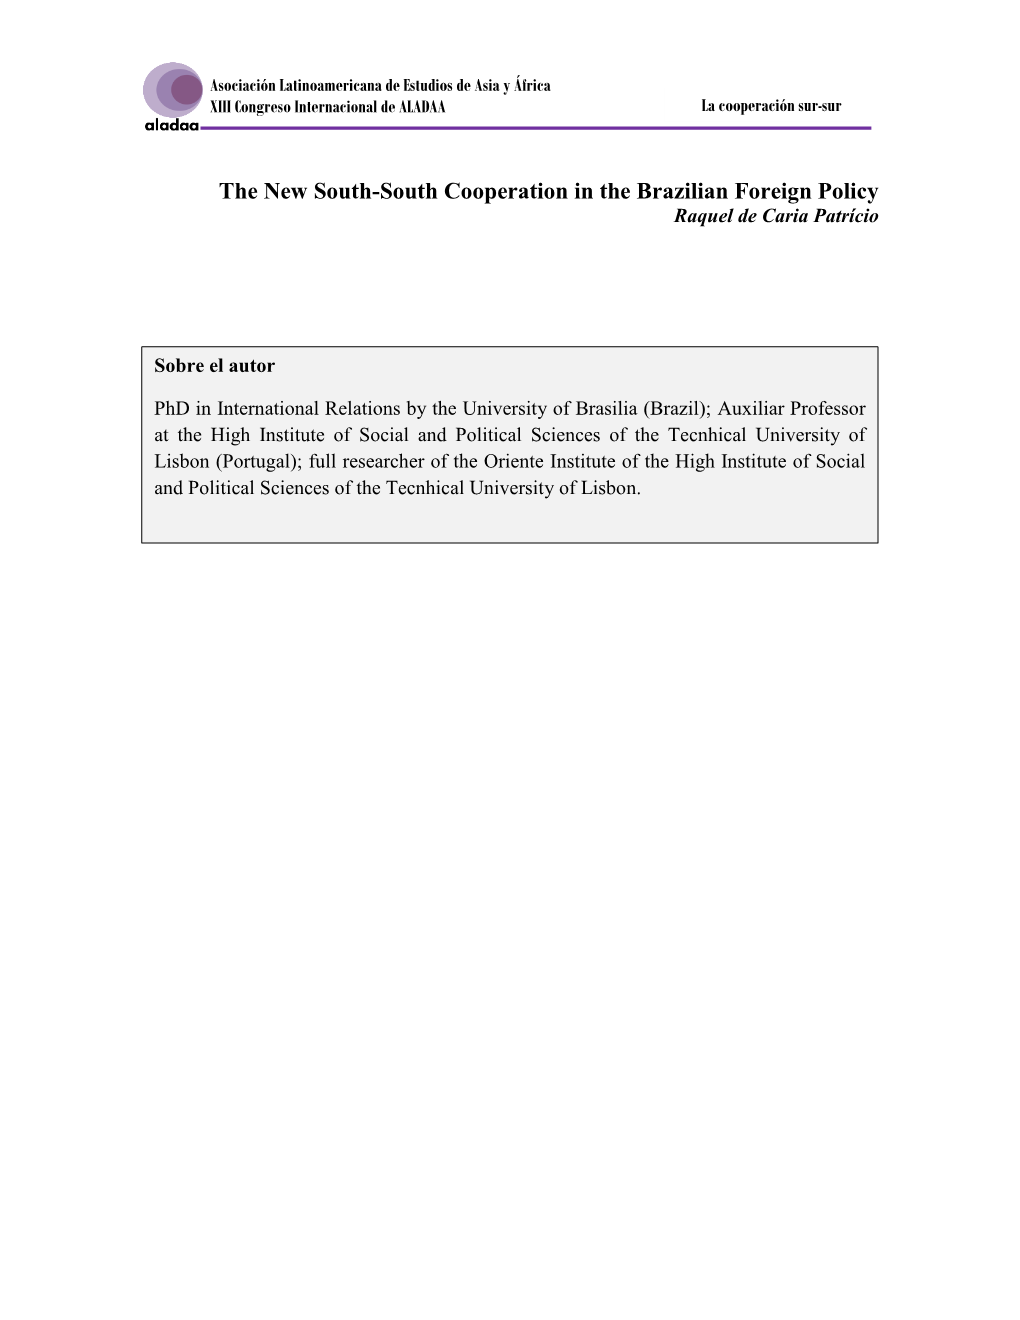 The New South-South Cooperation in the Brazilian Foreign Policy Raquel De Caria Patrício